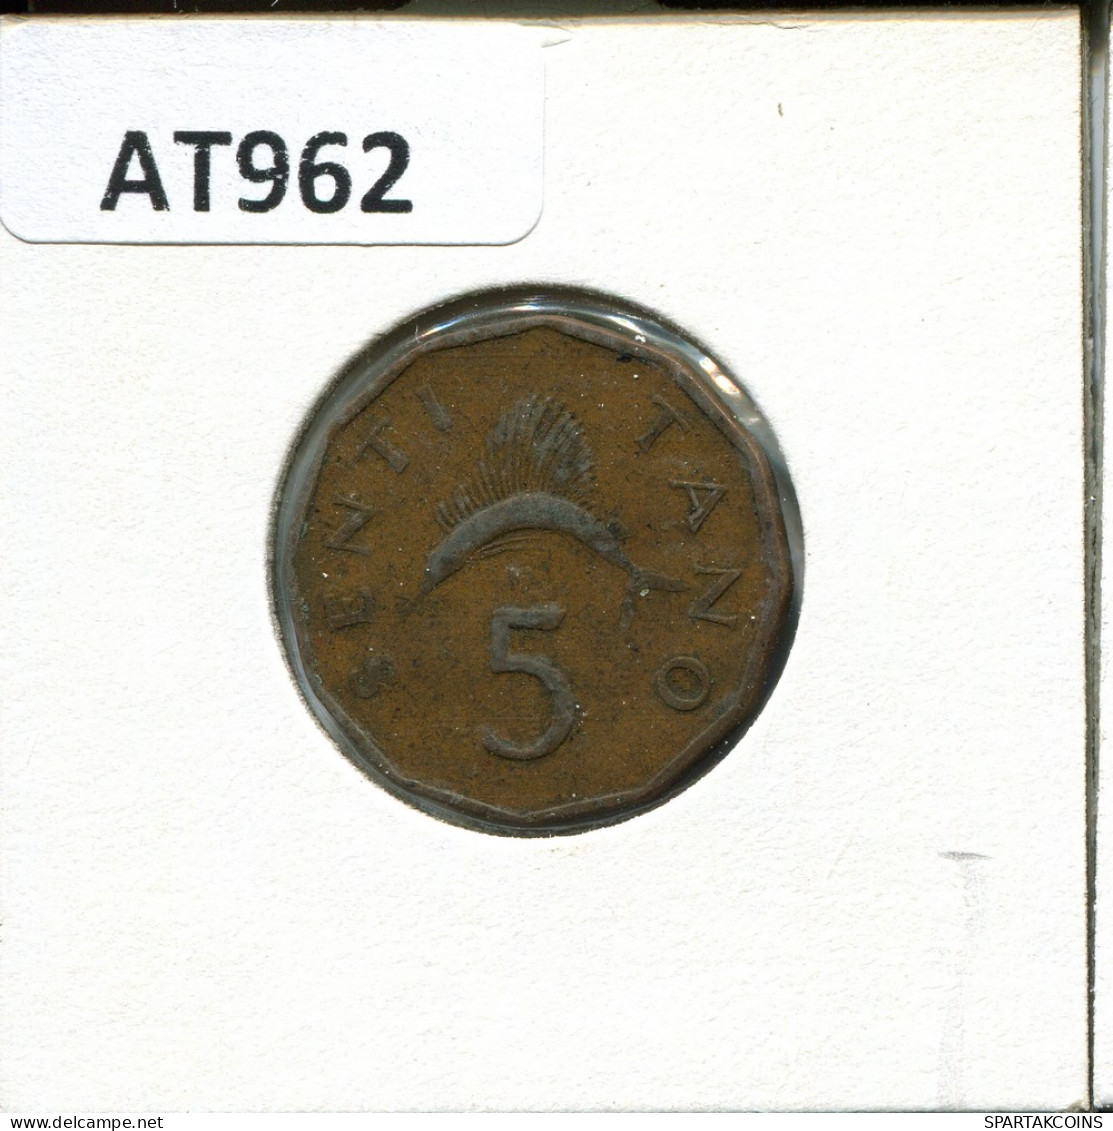 5 SENTI 1972 TANZANIA Coin #AT962.U - Tanzania